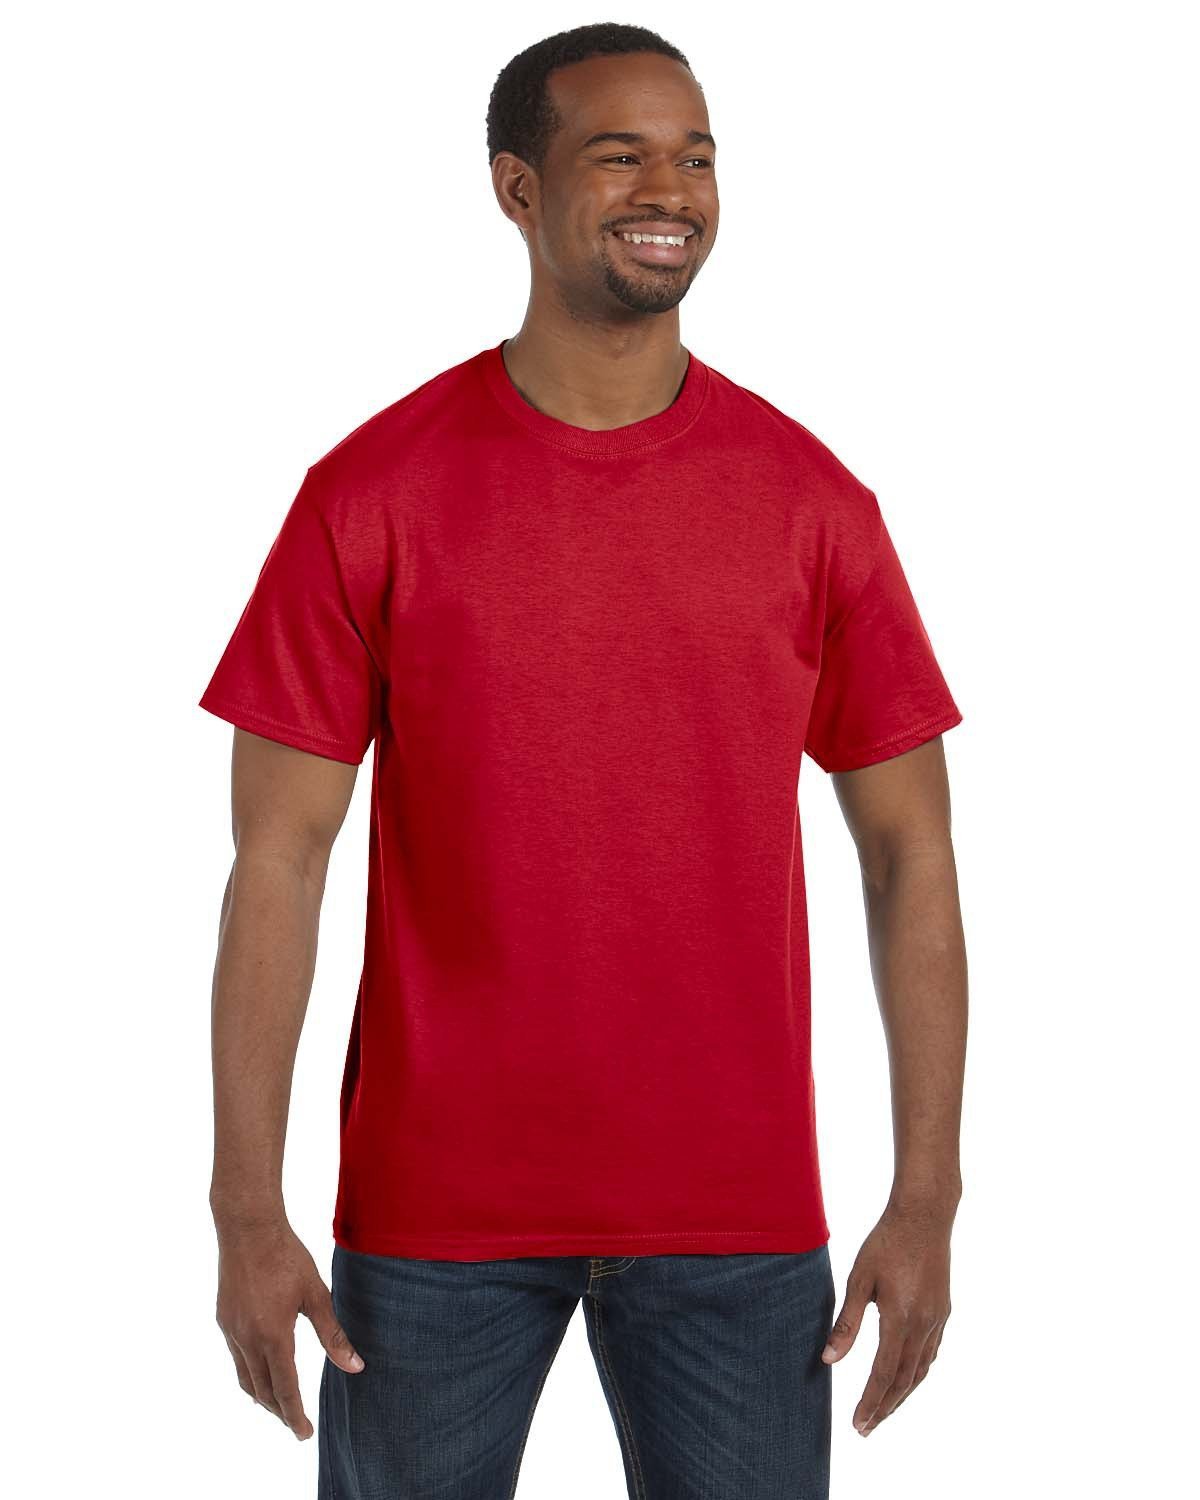 Gildan Red / S Apparel Apparel | Adult T-shirt Wholesale Craft Sign Vinyl Monroe GA 30656